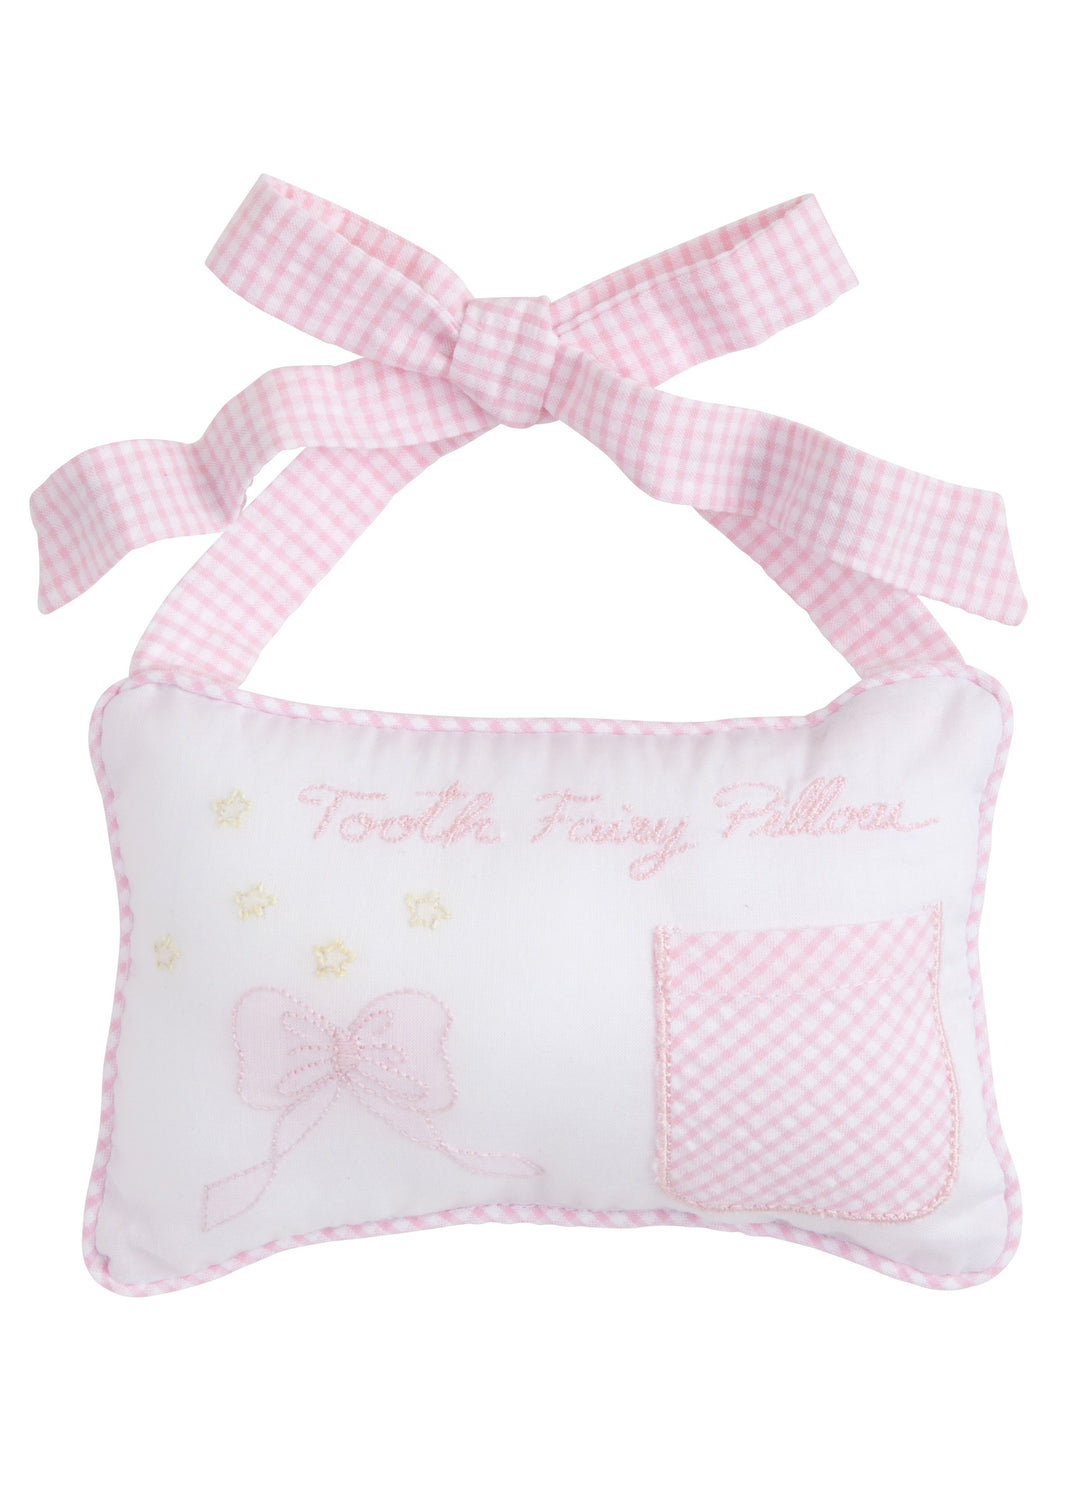 Tooth Fairy Door Pillow - Light Pink Gingham